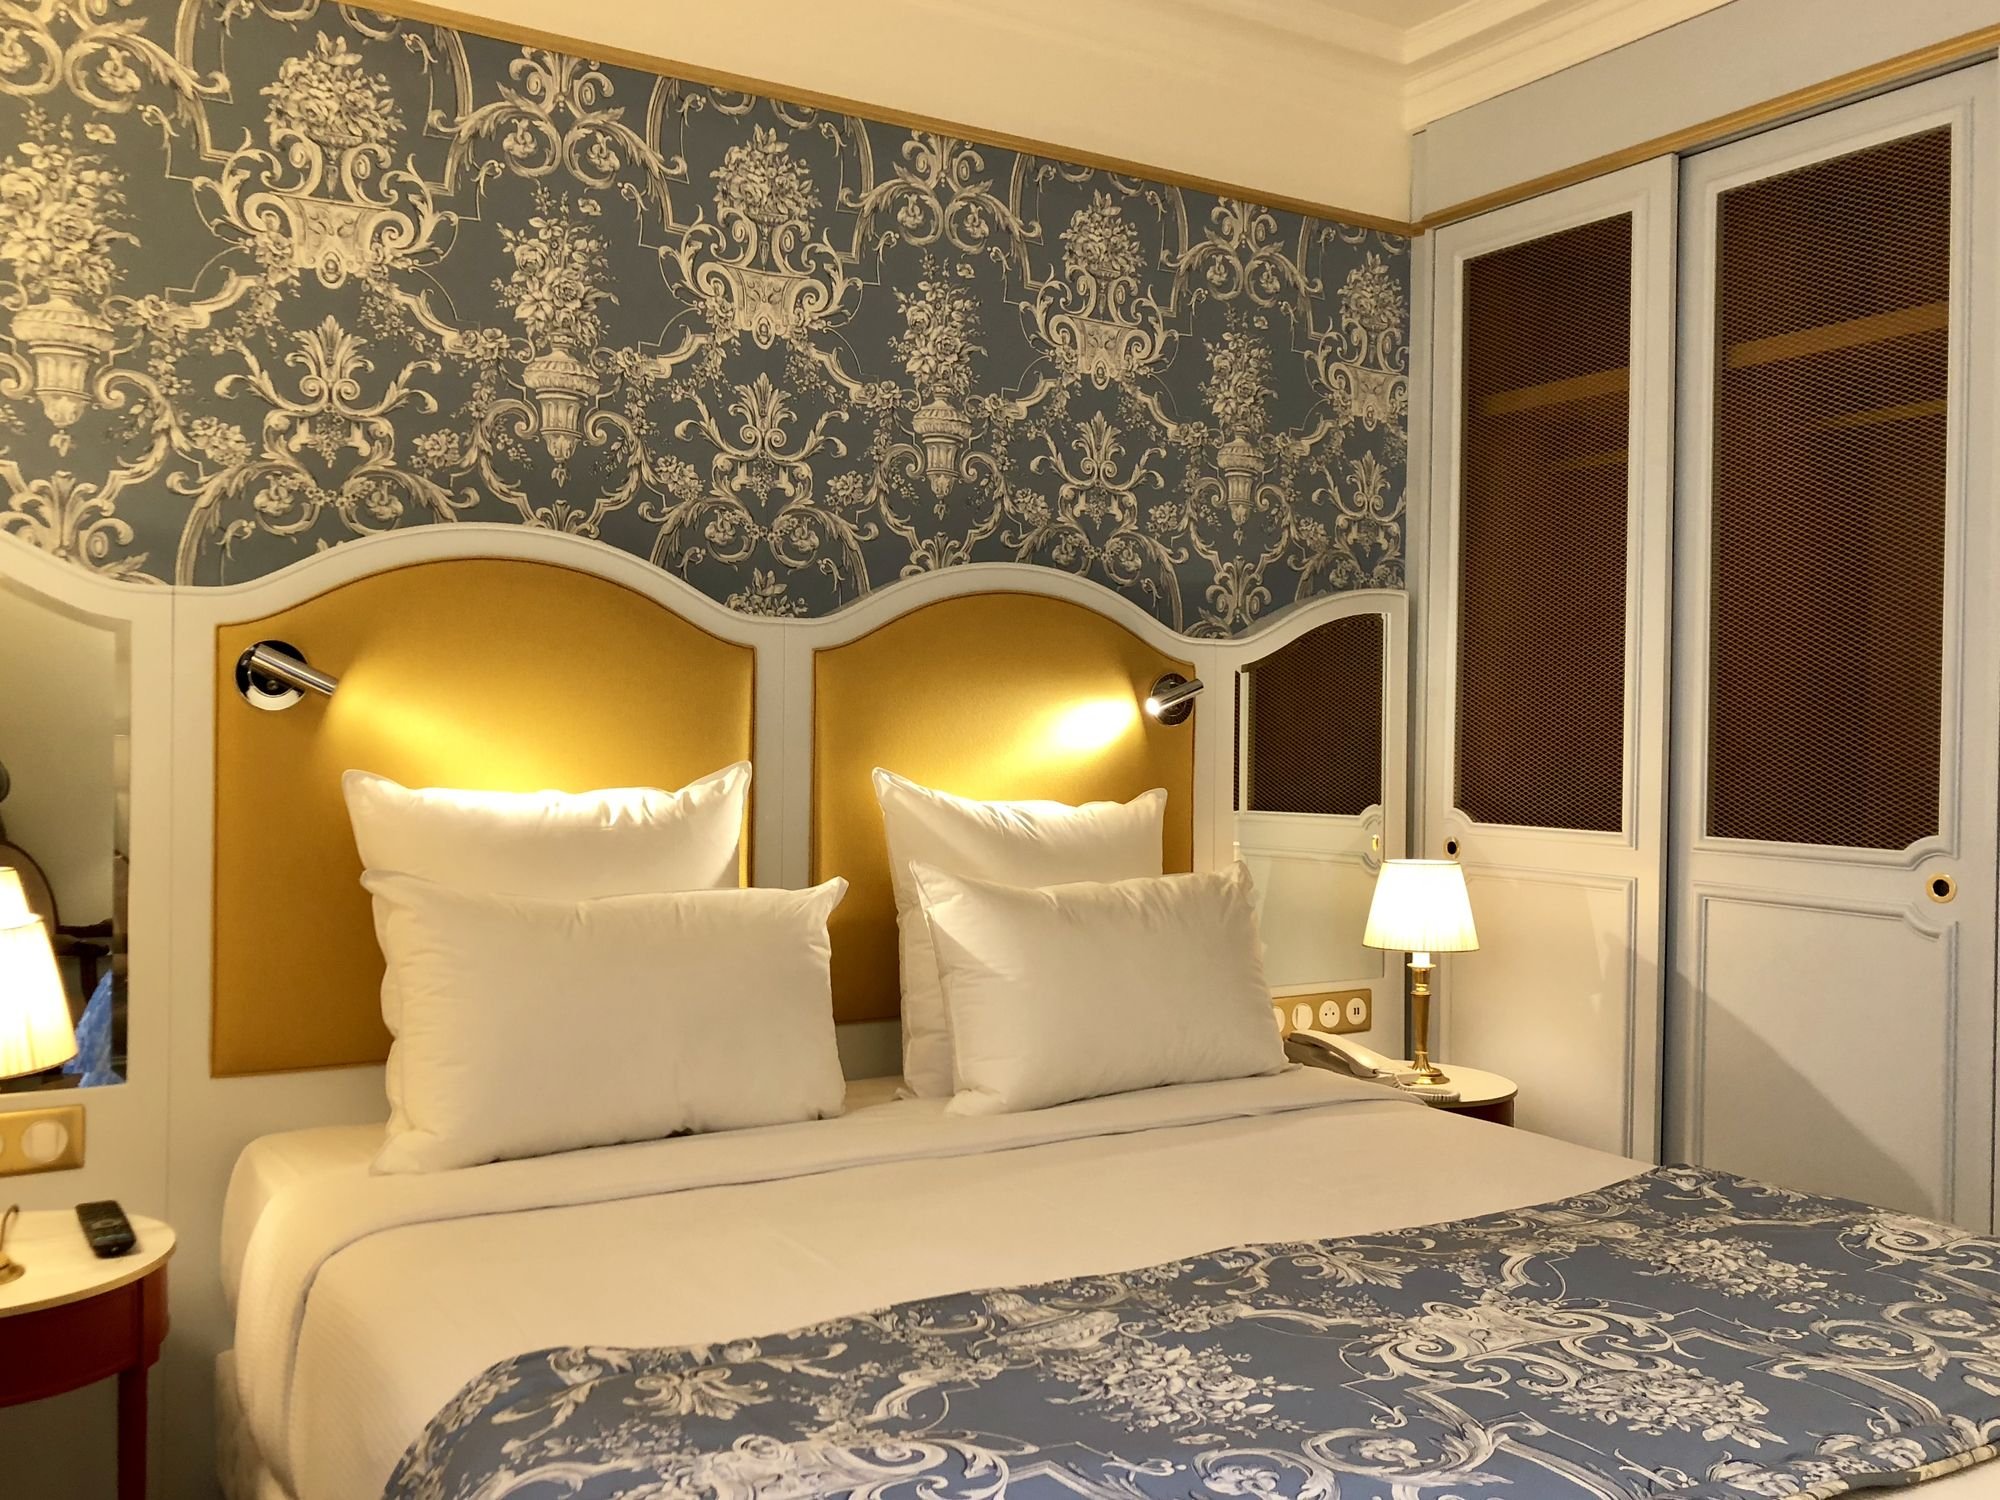 378/Chambres/Classic/hotel-mayfair-paris-classic-room-02.jpg